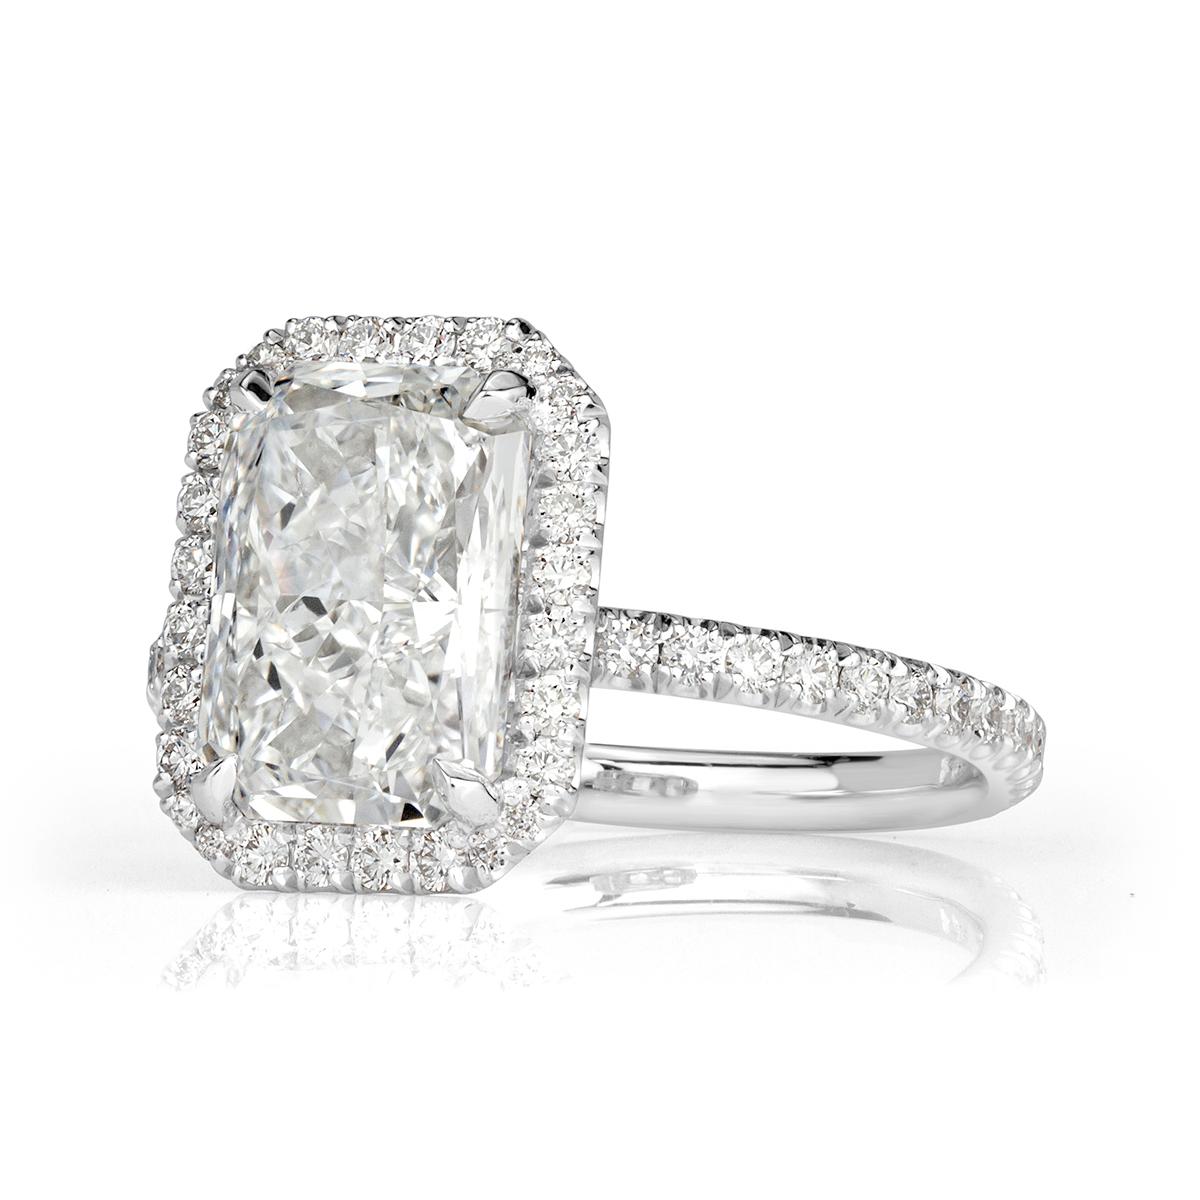 Women's or Men's Mark Broumand 3.58 Carat Radiant Cut Diamond Engagement Ring